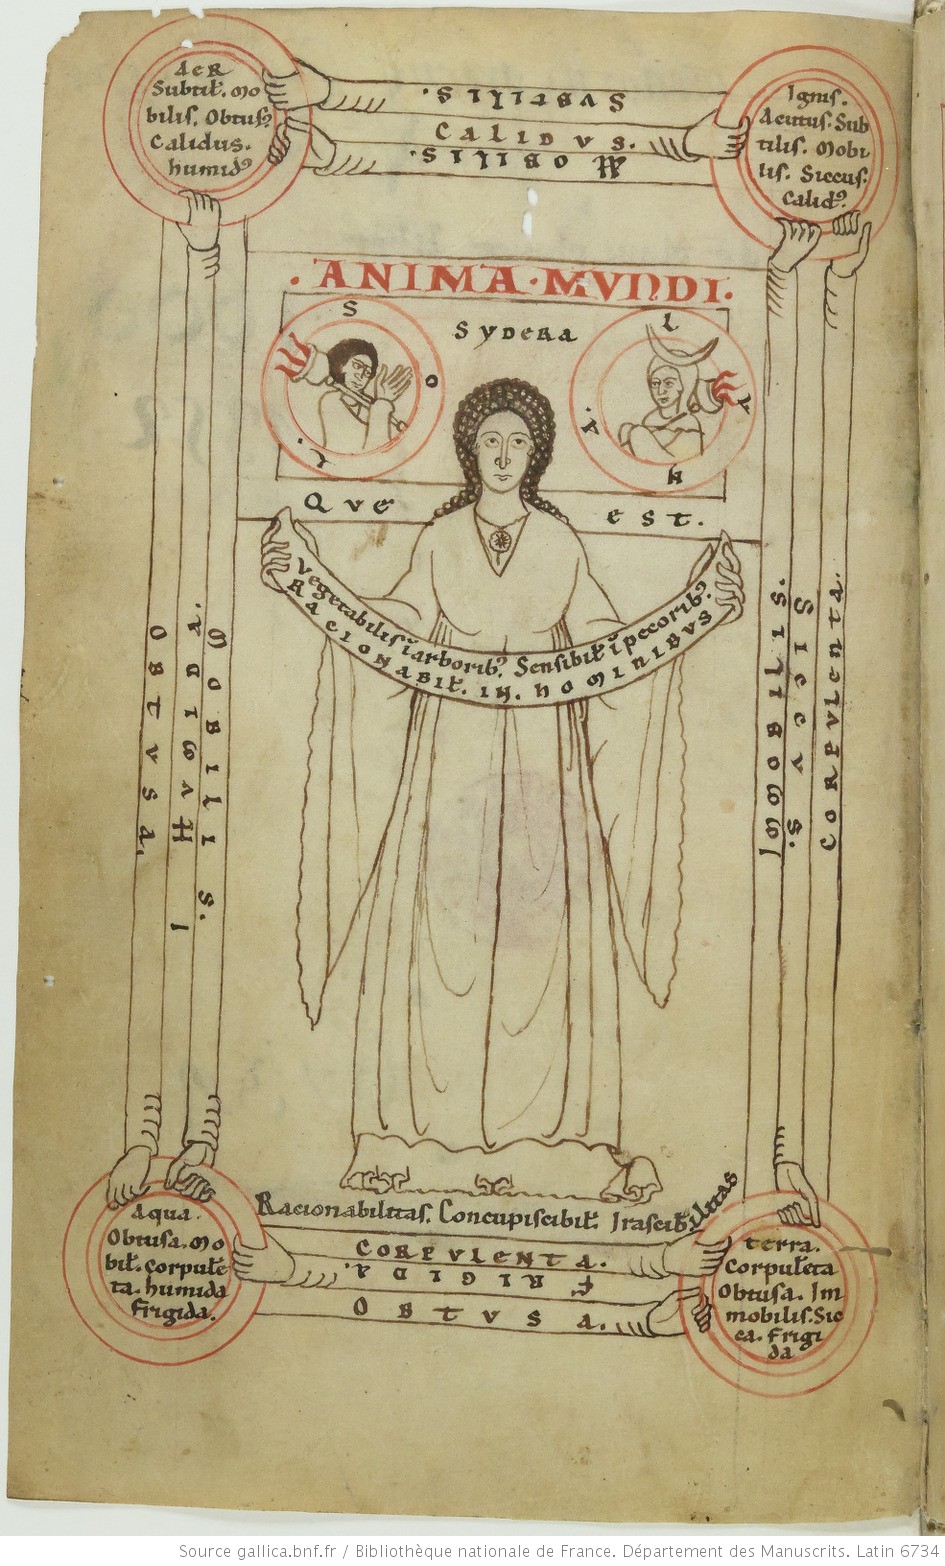 1100-1200 Honorius Augustodunensis, Clavis physicae BNF Latin 6734 fol 1v